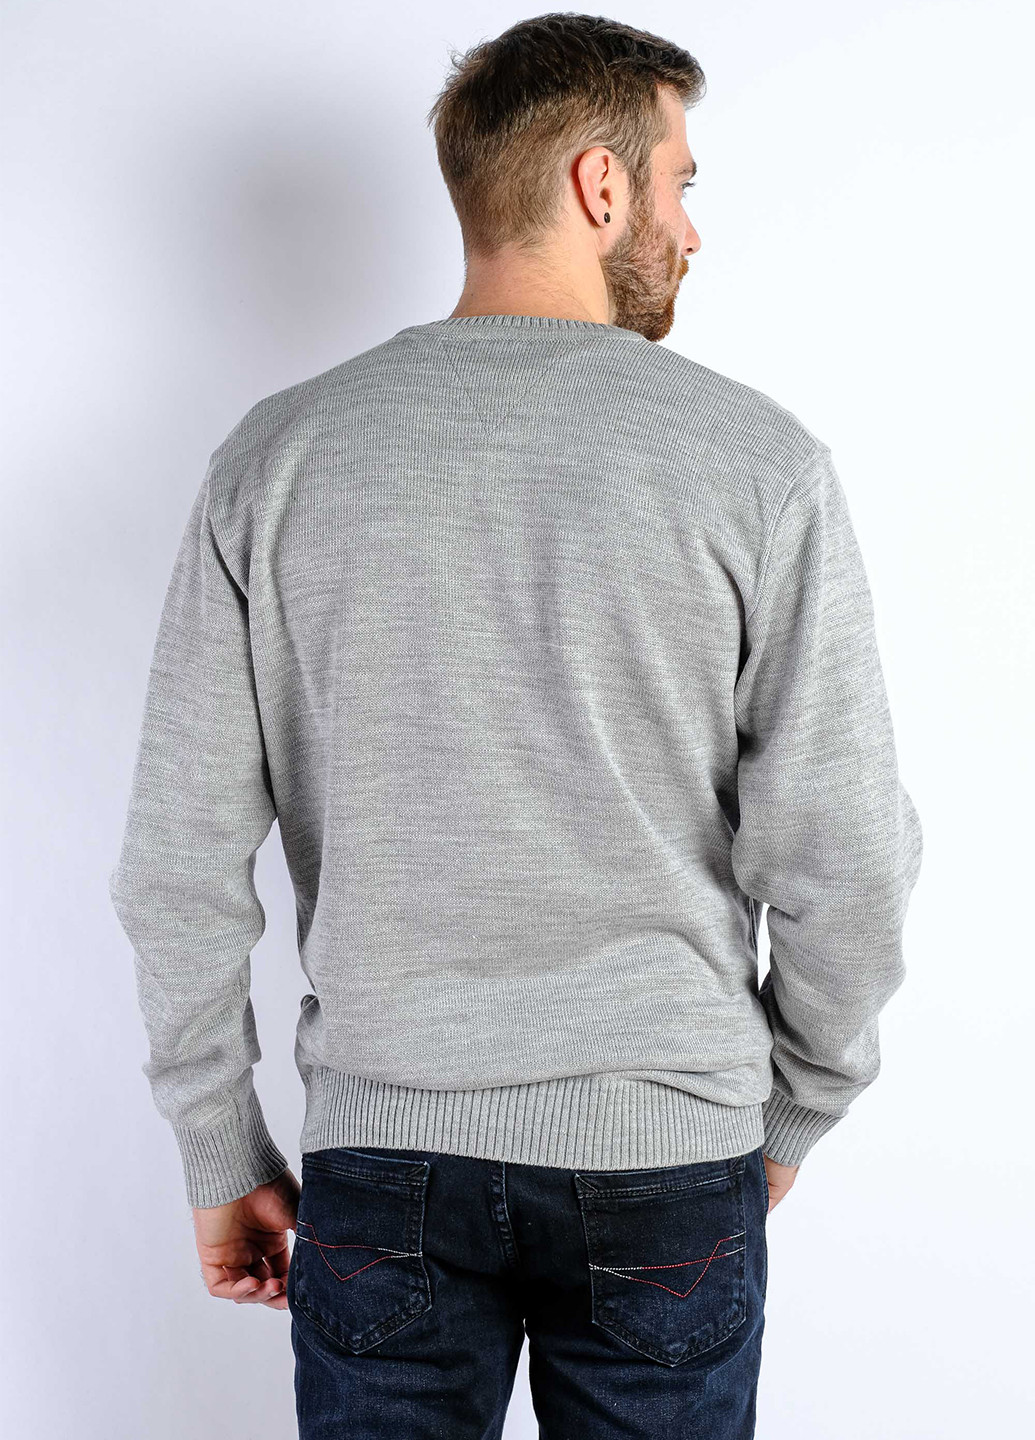 Светло-серый демисезонный пуловер пуловер Time of Style